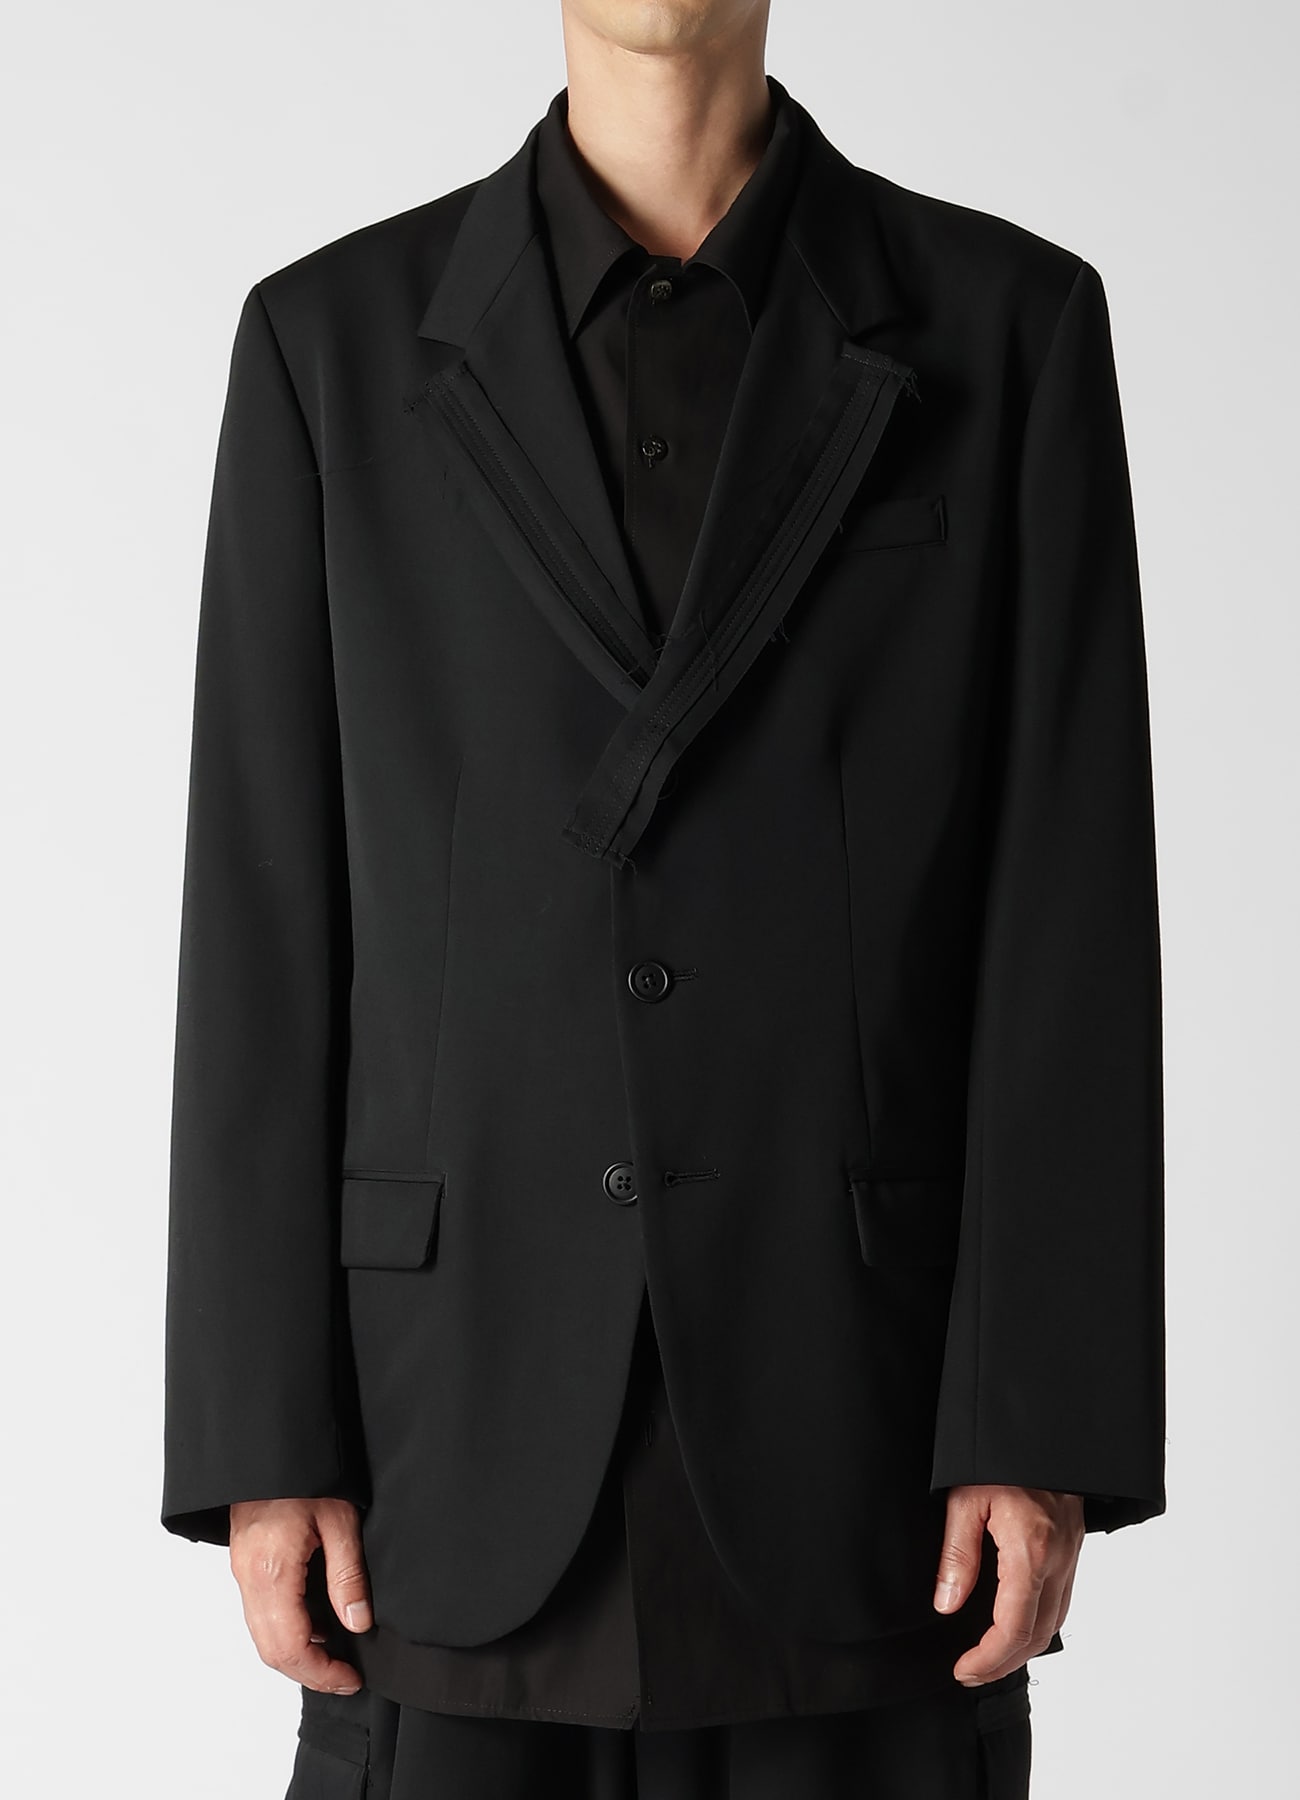 24,700円\u003cBASE MARK\u003eNotched Wool Jacket - BLACK